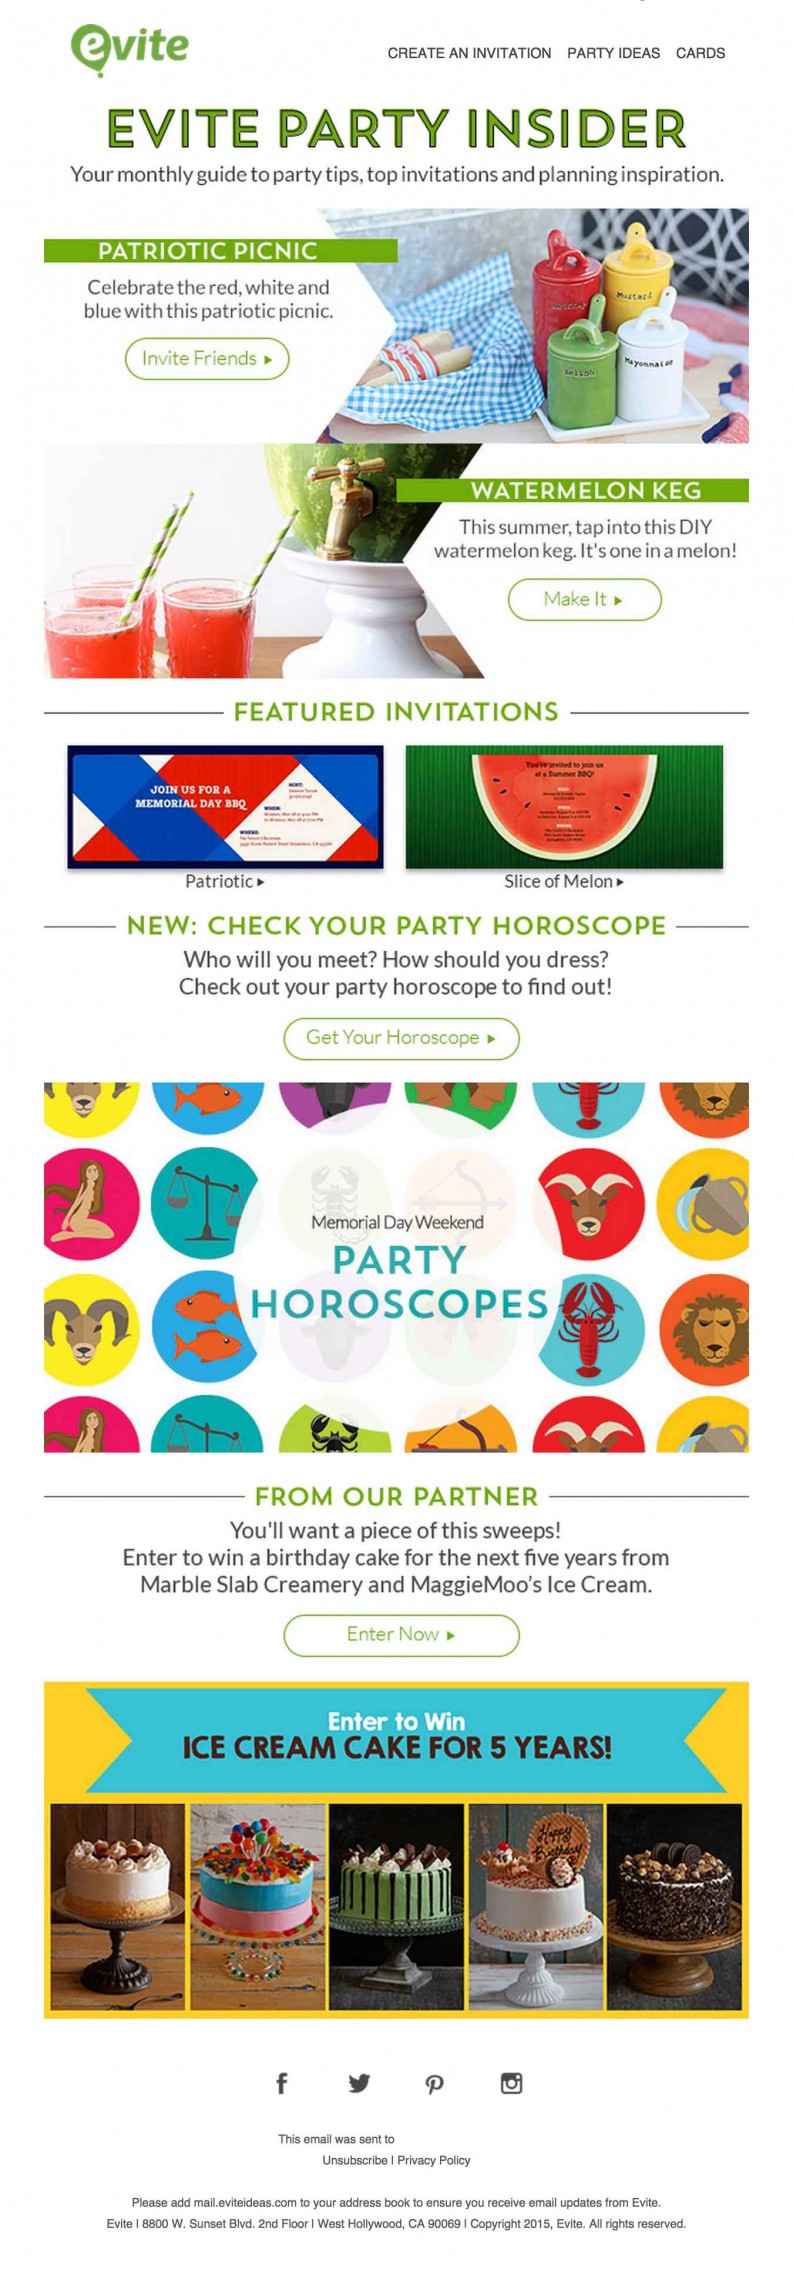 Evite Party Insider email design color